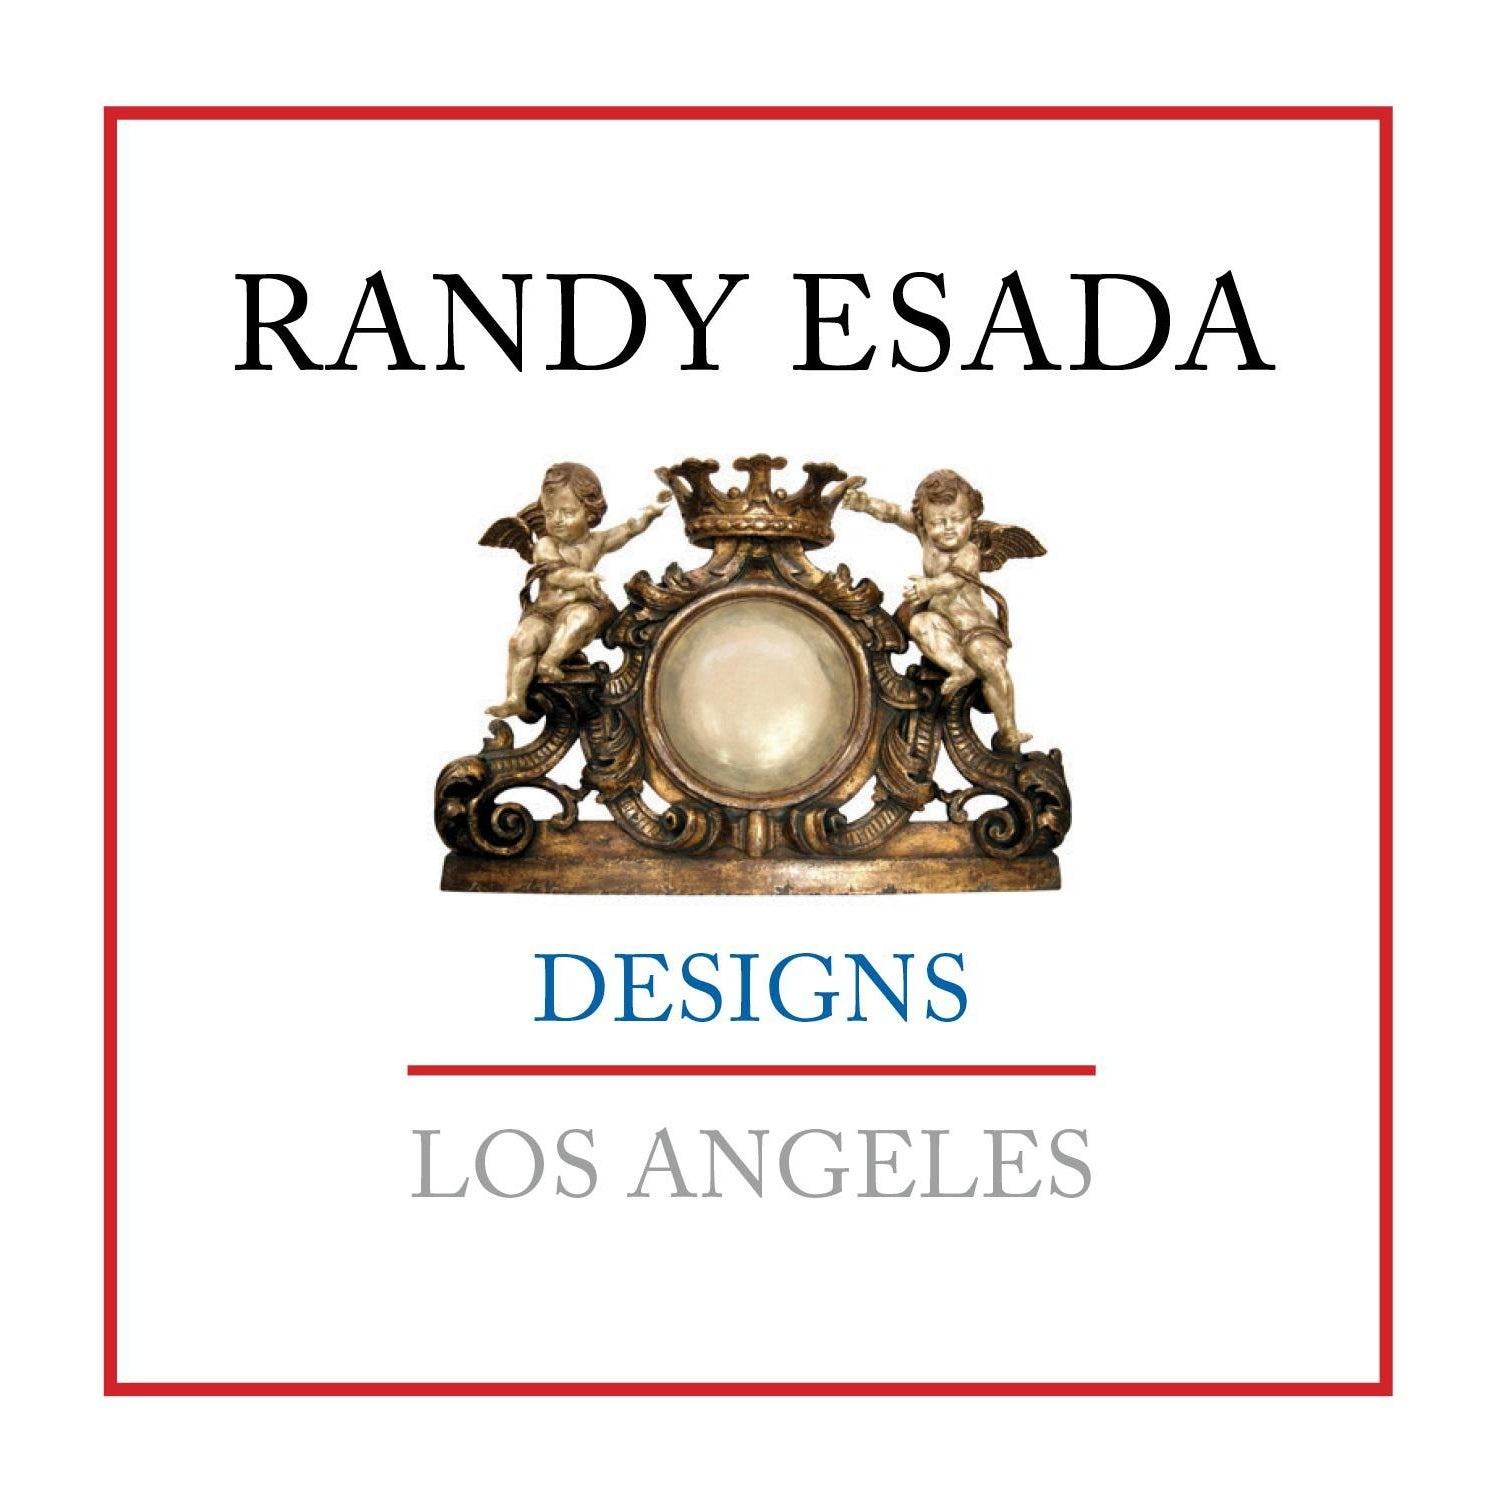 North American Huge Carved Italian Heraldic Crest over Door with Angels by Randy Esada Designs For Sale